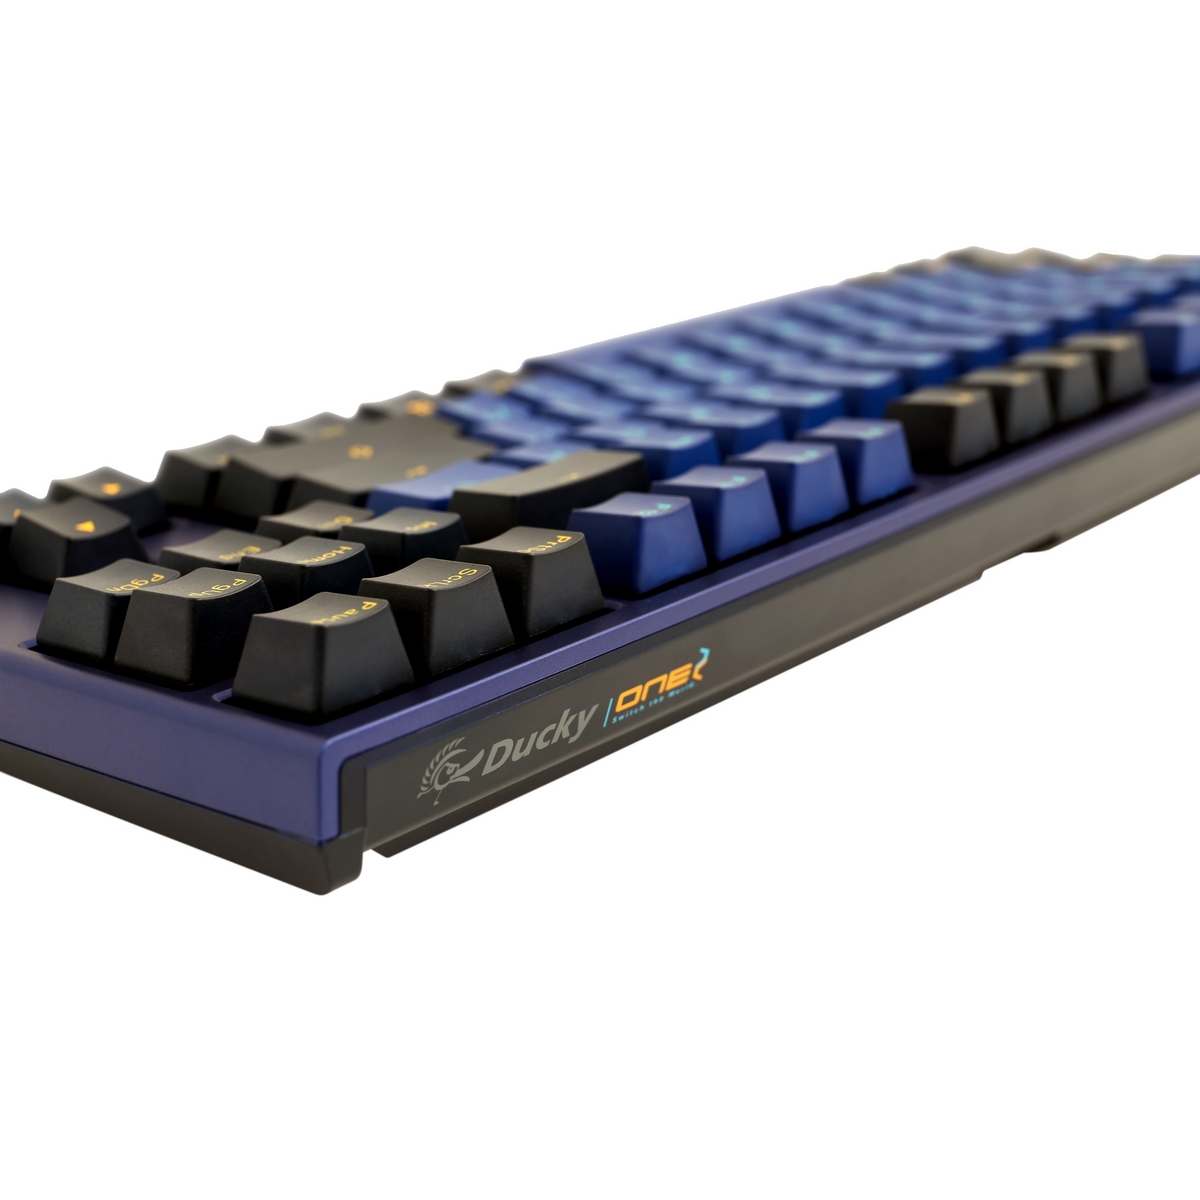 Ducky - Ducky One 2 TKL Horizon Brown Cherry MX Switch USB Mechanical Gaming Keyboard UK Layout